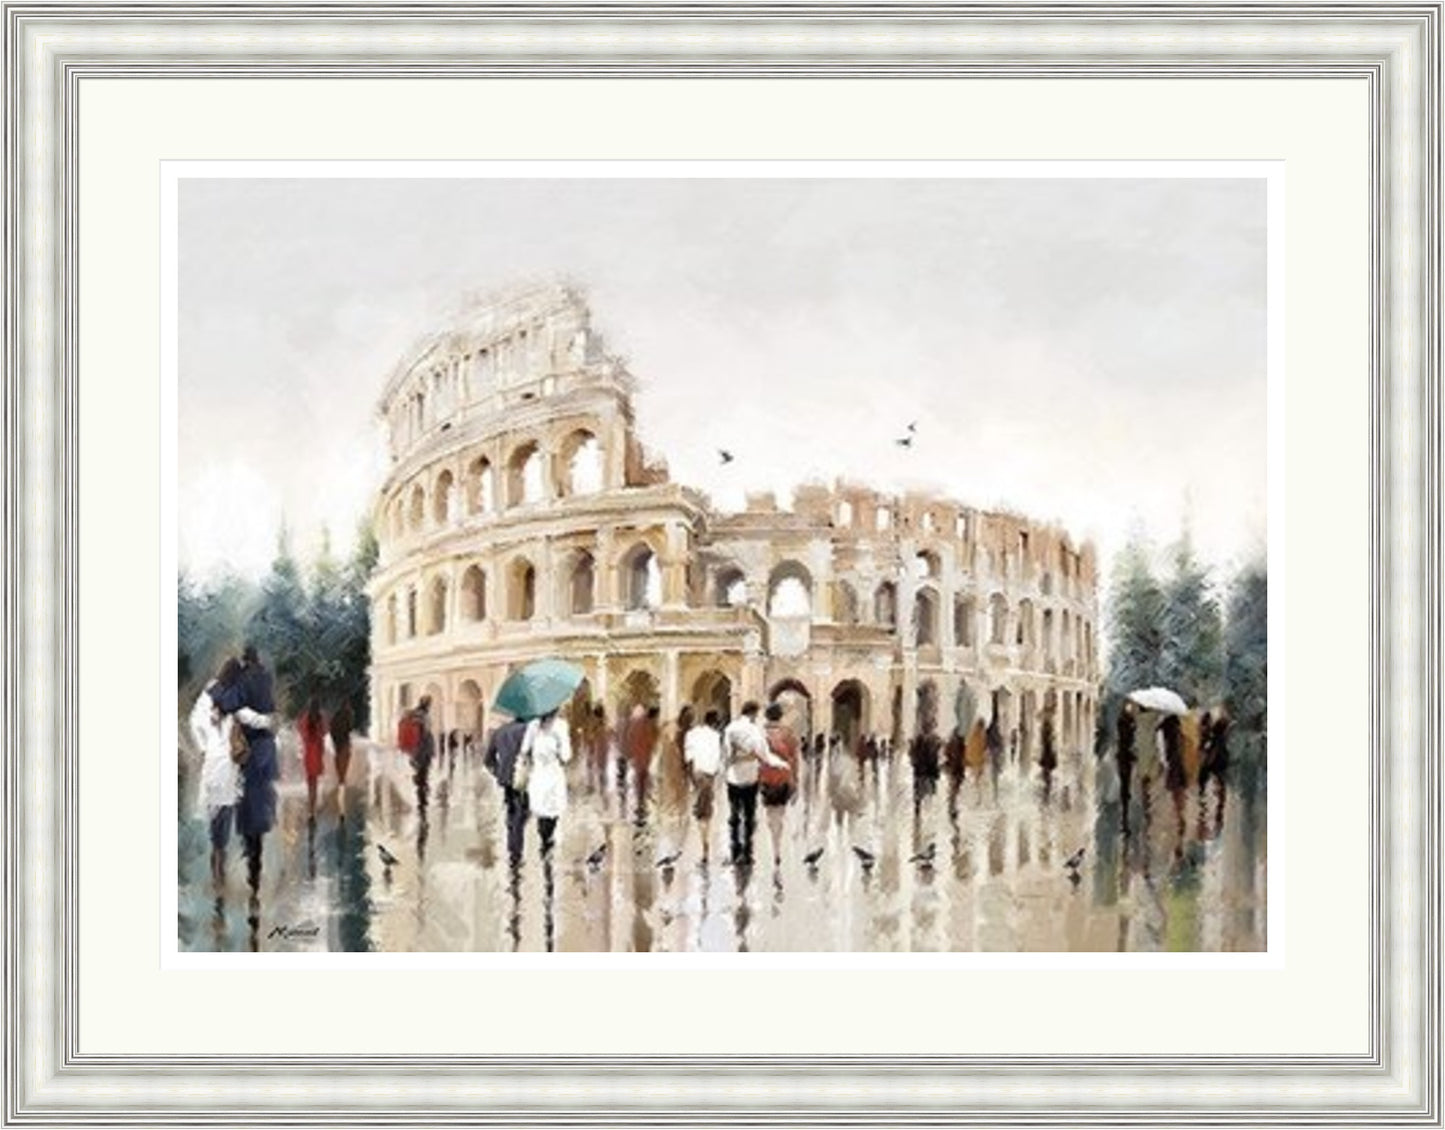 Colosseum, Rome by Richard MacNeil